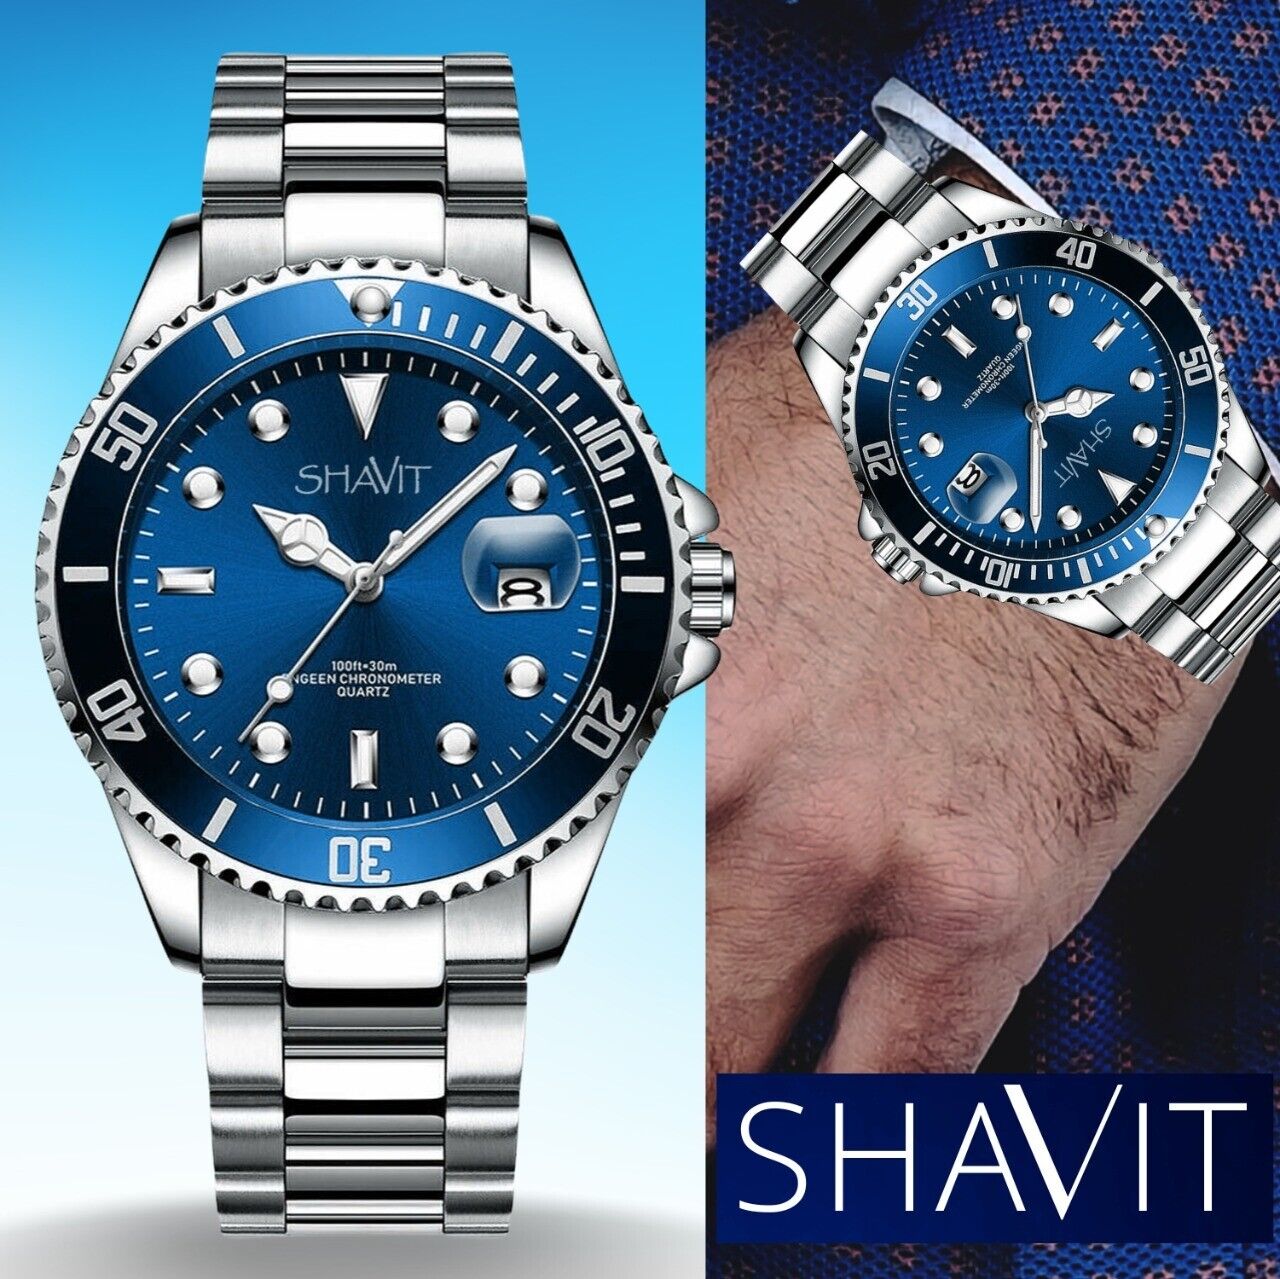 Fashion Men Watch Stainless Steel Analog Quartz Classic Male Wristwatch, Blue